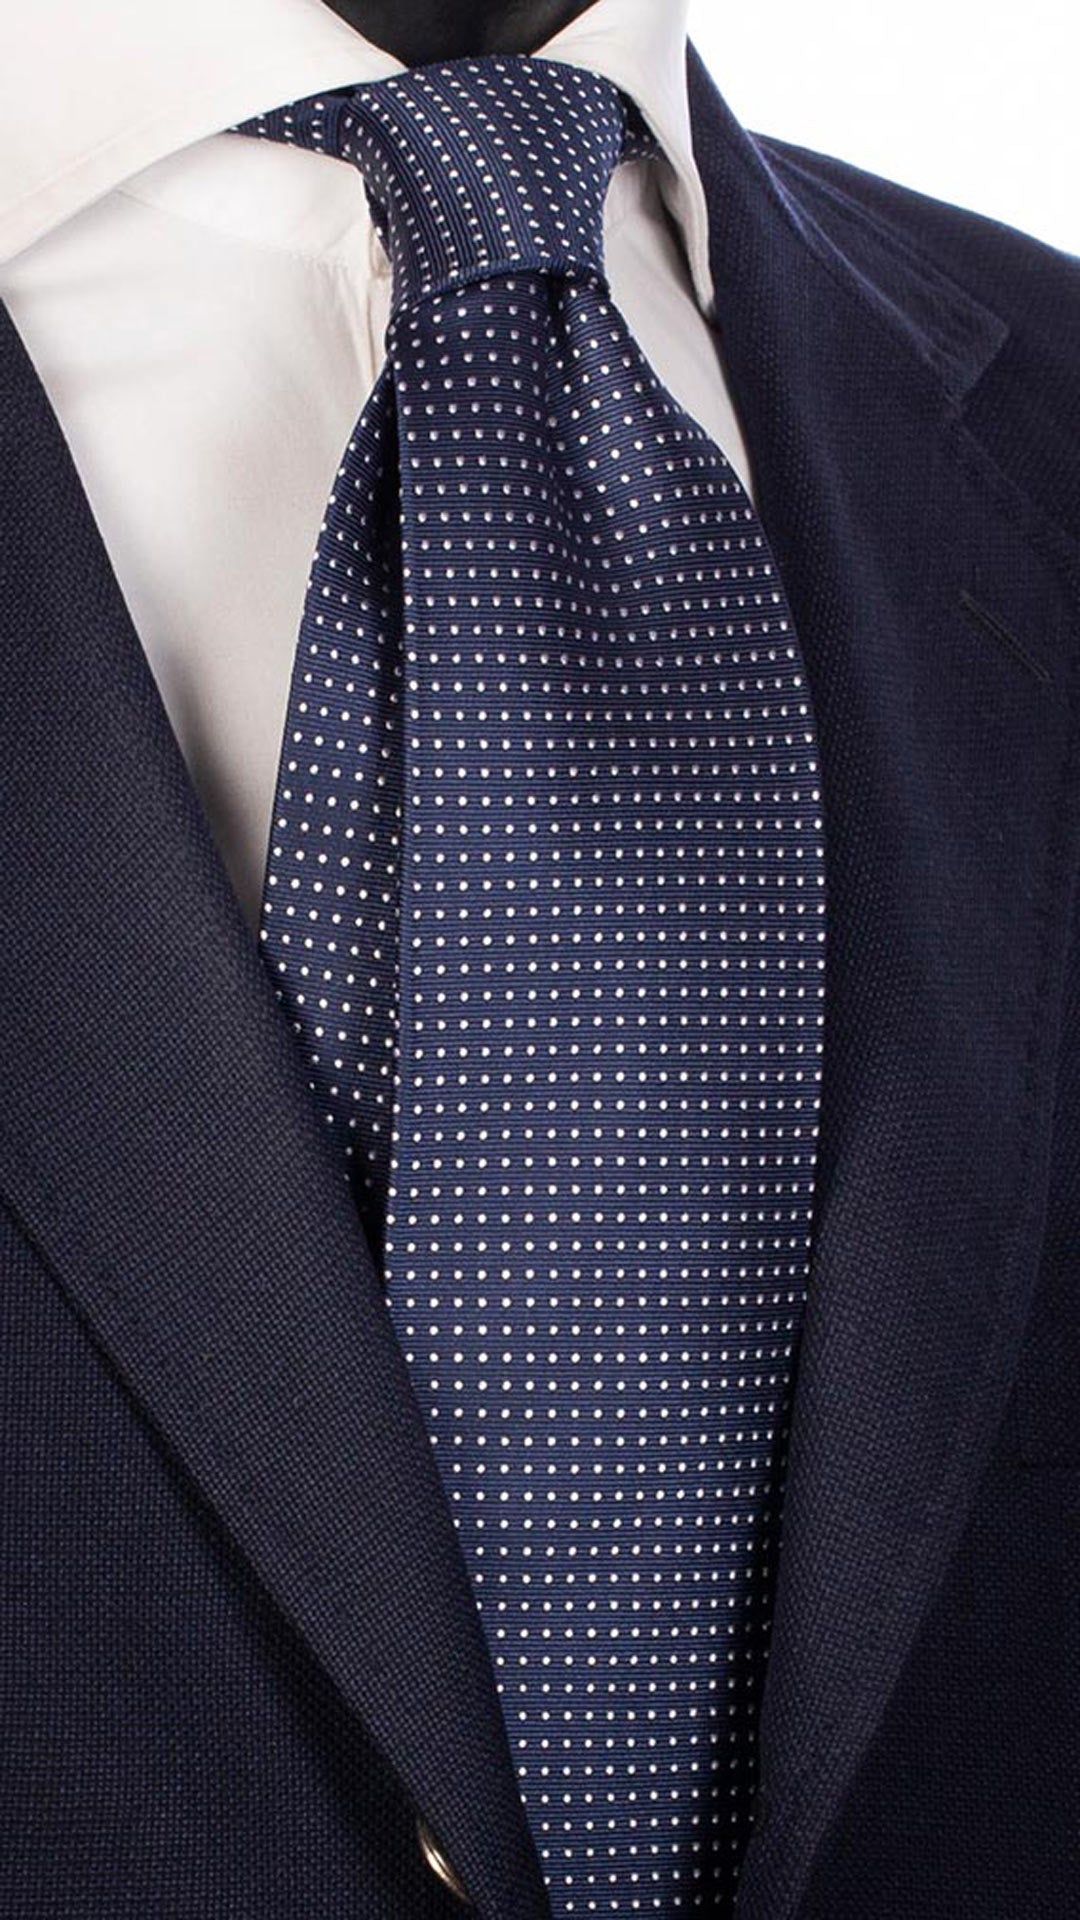 Cravatta da Cerimonia di Seta Blu Navy Pois Bianco CY4700 Made in Italy Graffeo Cravatte